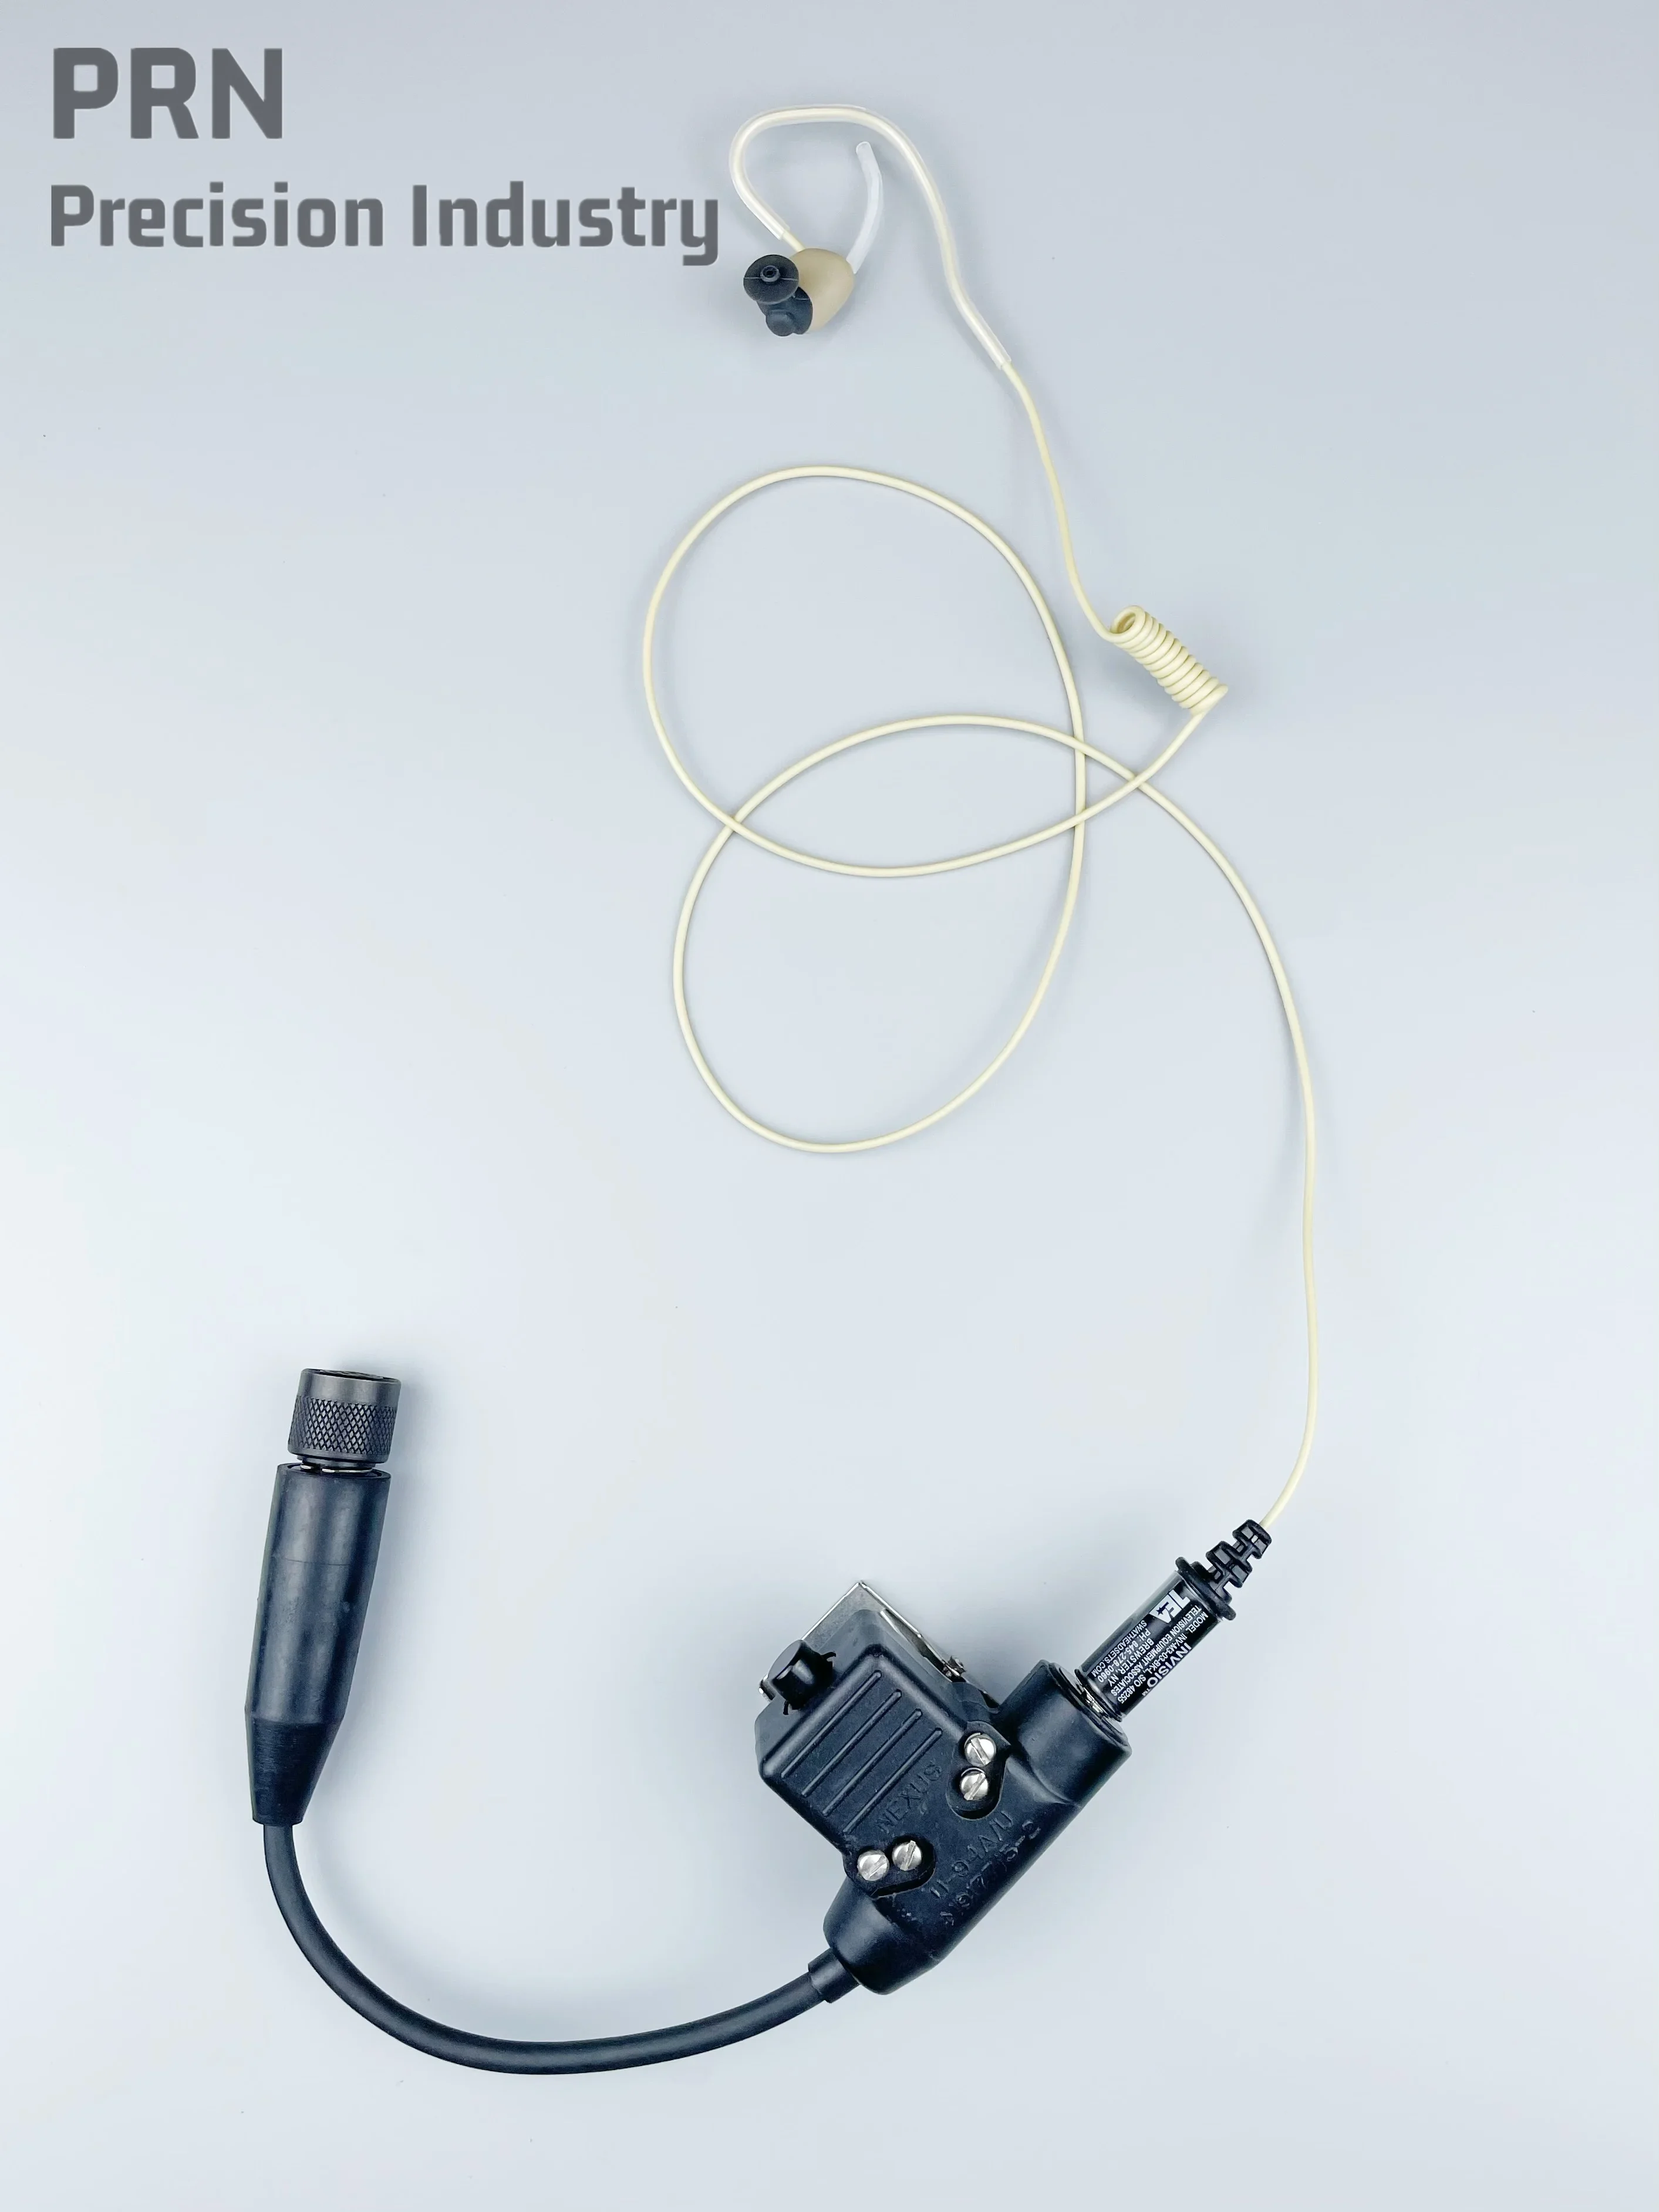 Ушите Seiko INVISIO M3 с костна проводимост с пясъчен цвят с четырехсекционным приставка адаптер Изображение 4